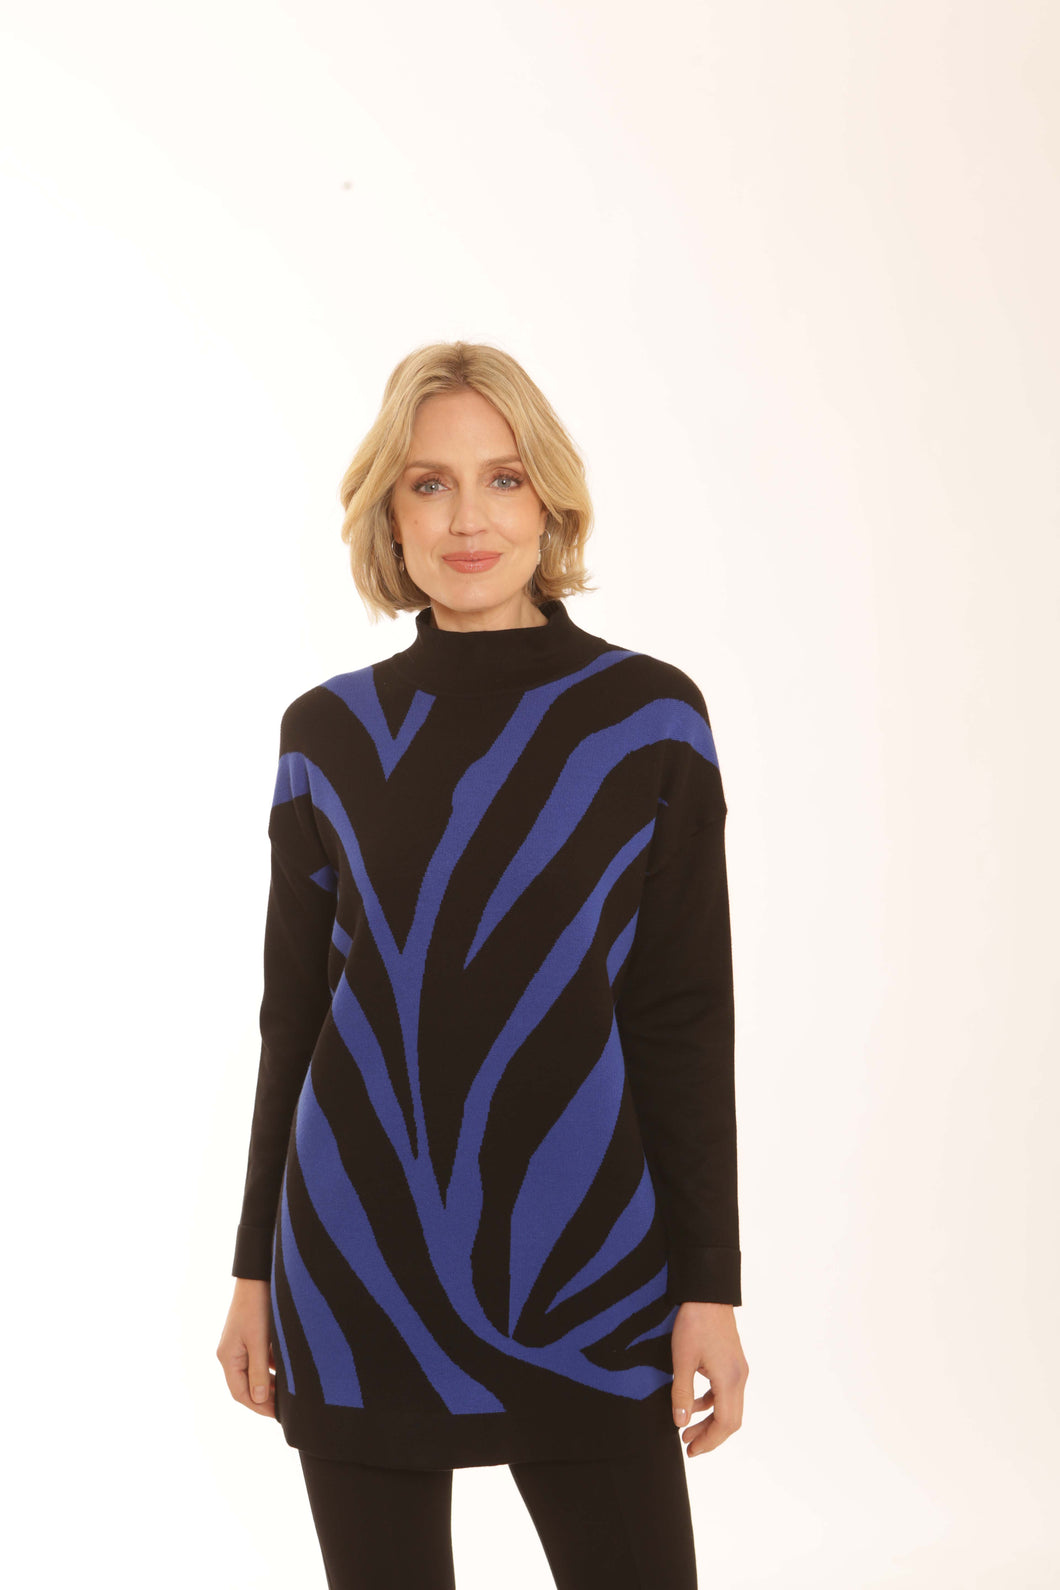 Pomodoro Blue Zebra Print Sweater (30% REDUCED)